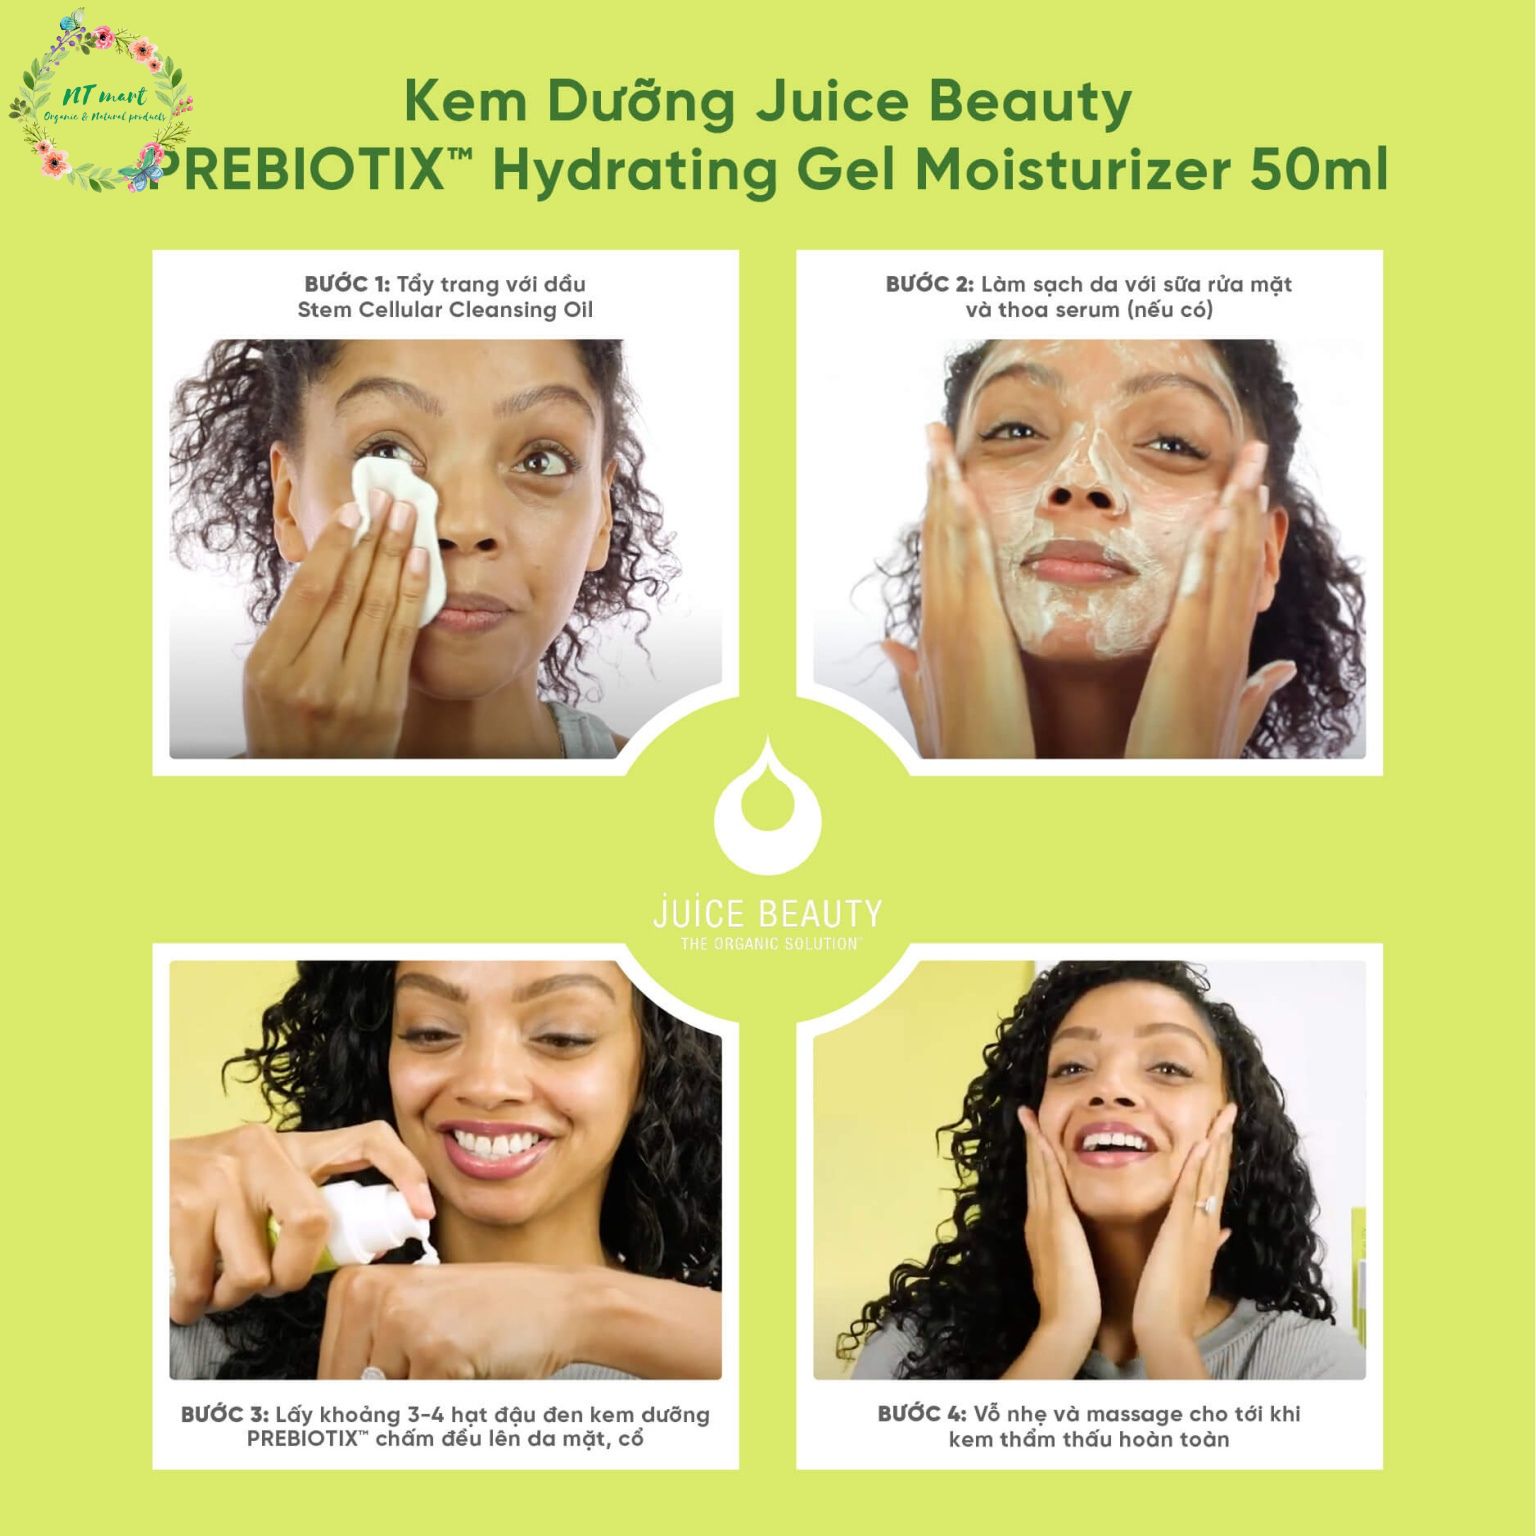 JUICE BEAUTY - Kem Dưỡng Siêu Nhẹ Cân Bằng Hệ Vi Sinh Vật Juice Beauty Prebiotix Hydrating Gel Moisturizer